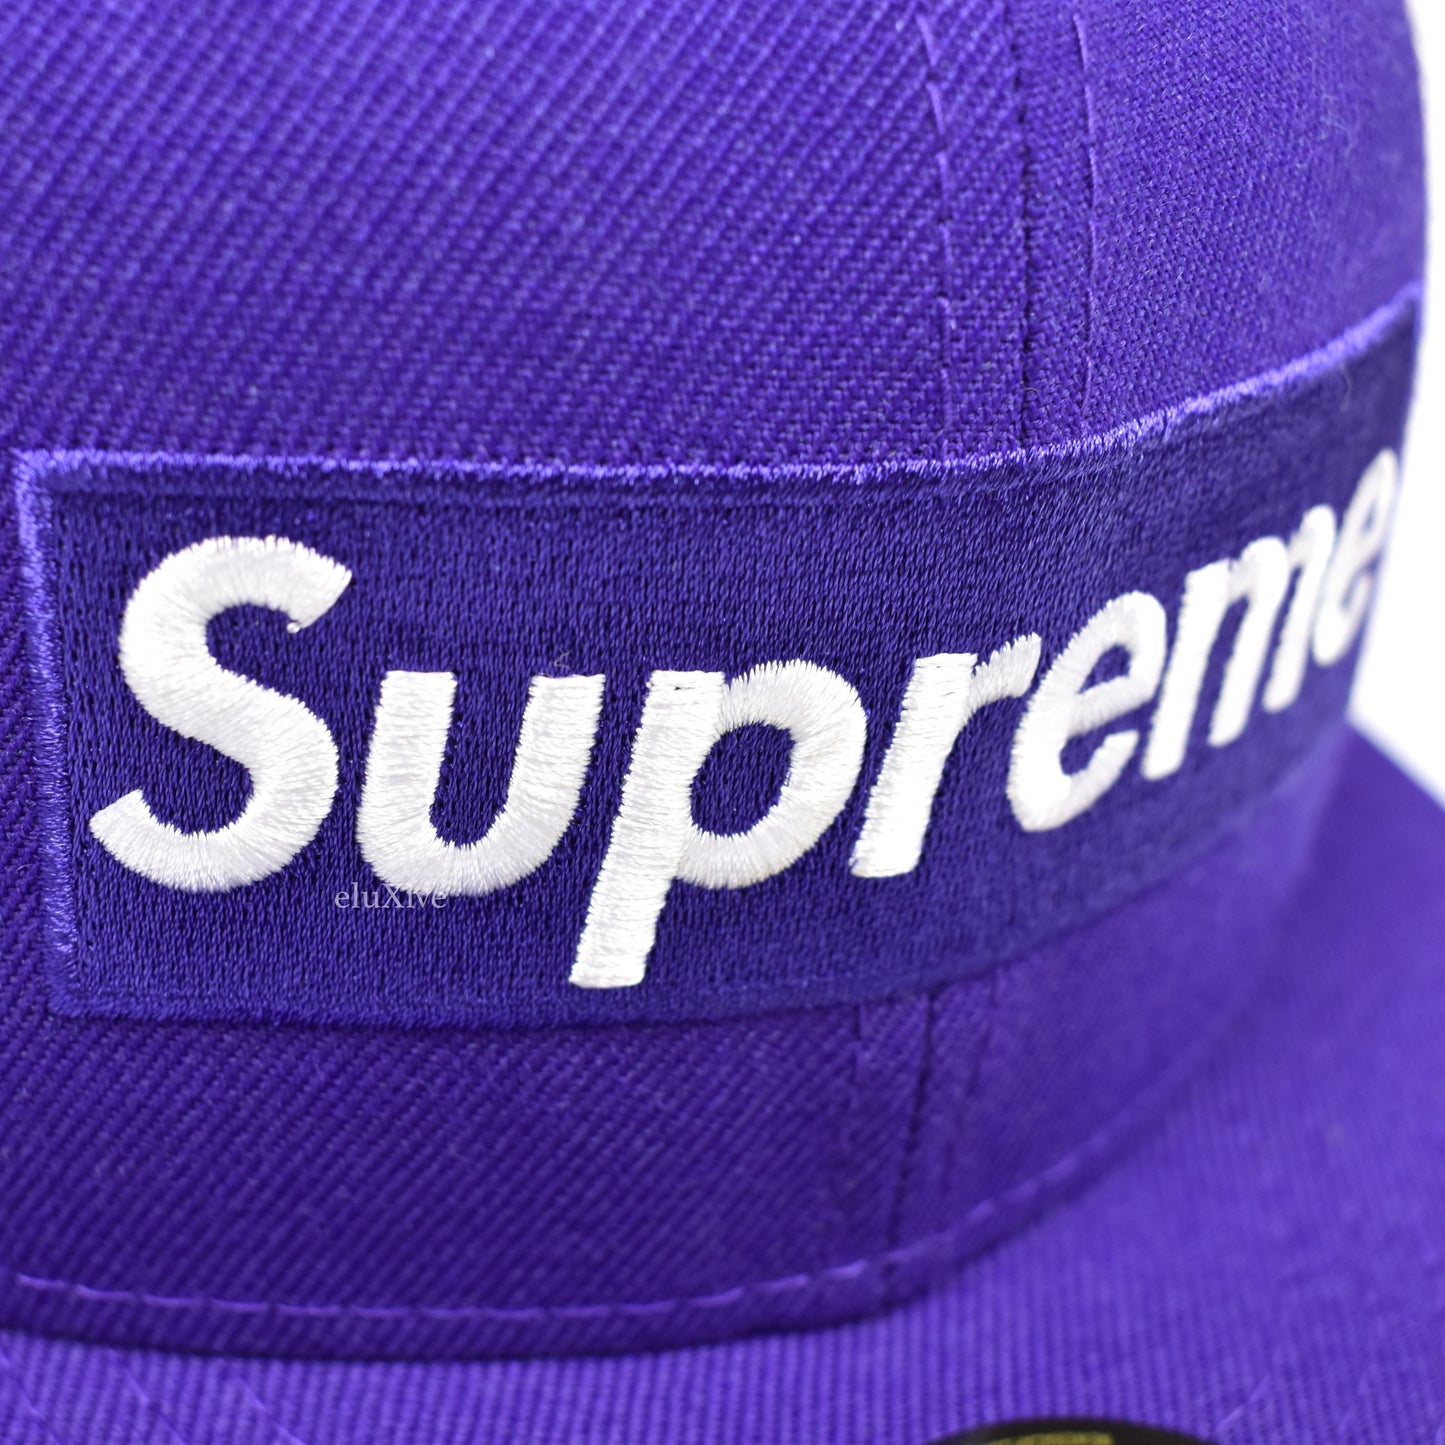 Supreme x New Era - World Famous Box Logo Fitted Hat (Purple)